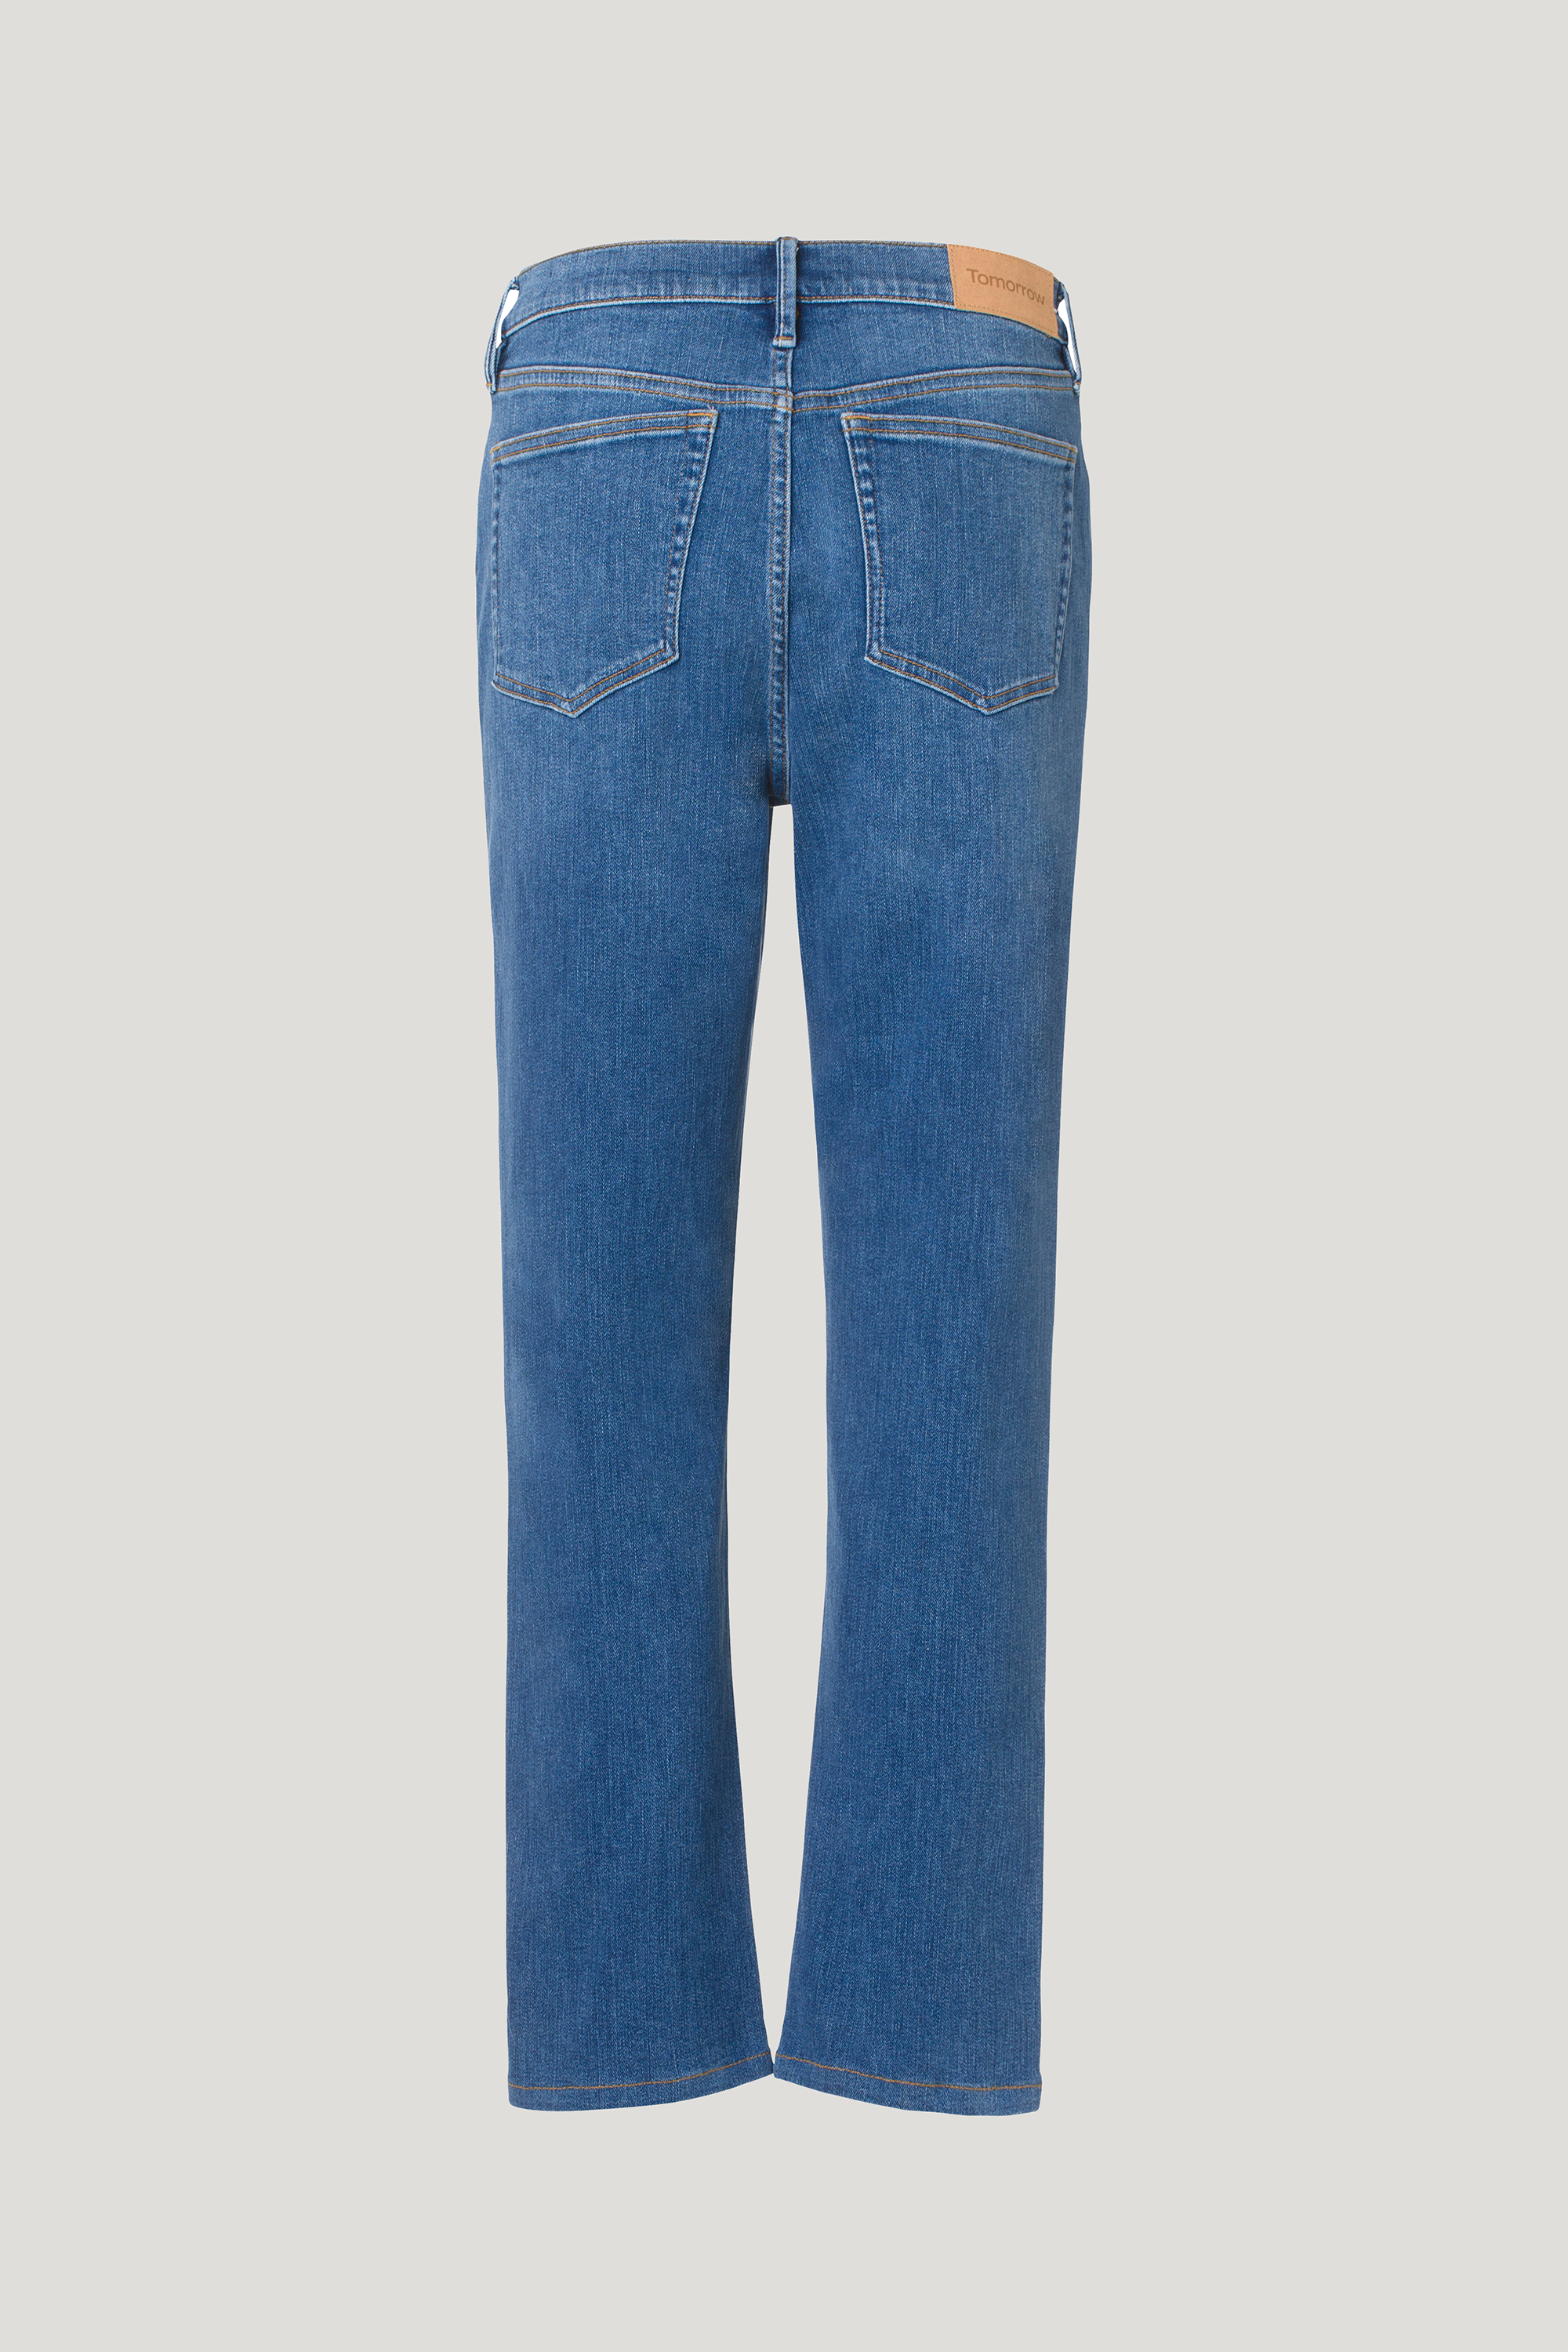 Tomorrow TD Teresa Jeans Wash Prato Vintage Jeans & Pants 51 Denim Blue